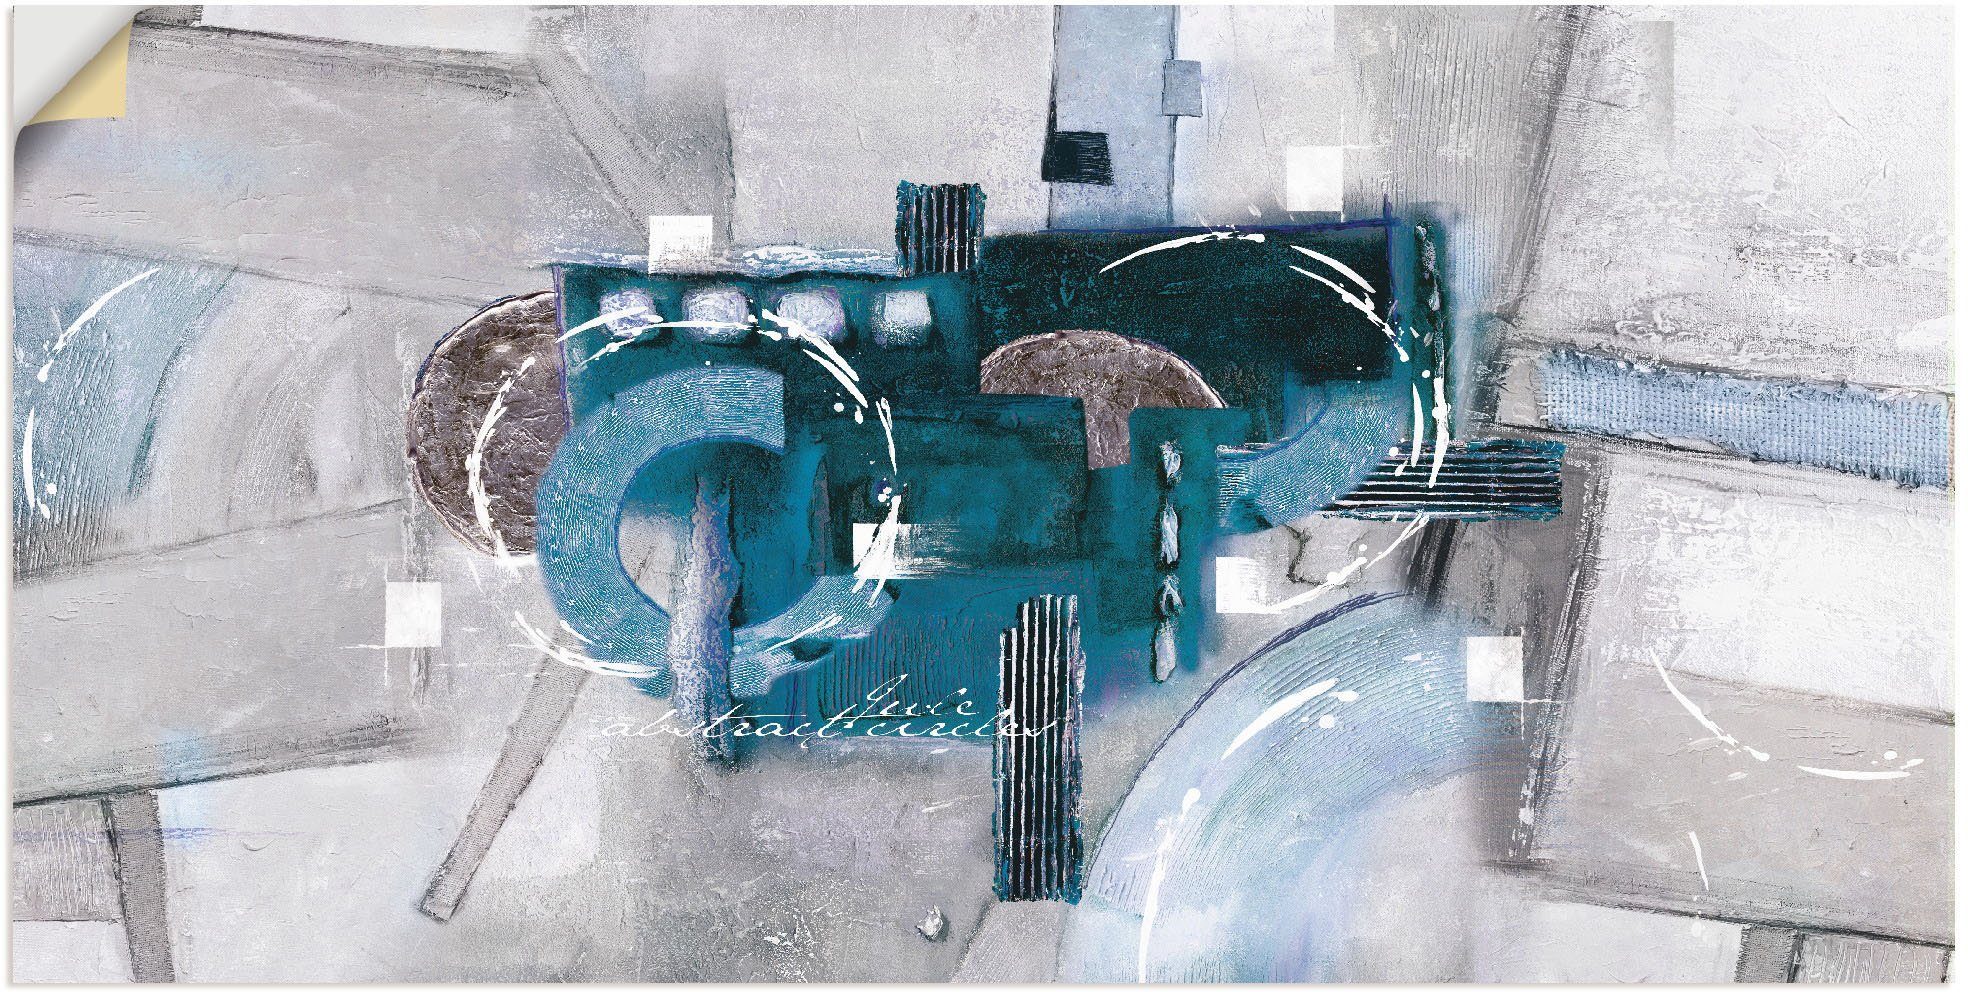 Artland Artprint Abstrakte blaue Kreise in vele afmetingen & productsoorten - artprint van aluminium / artprint voor buiten, artprint op linnen, poster, muursticker / wandfolie ook